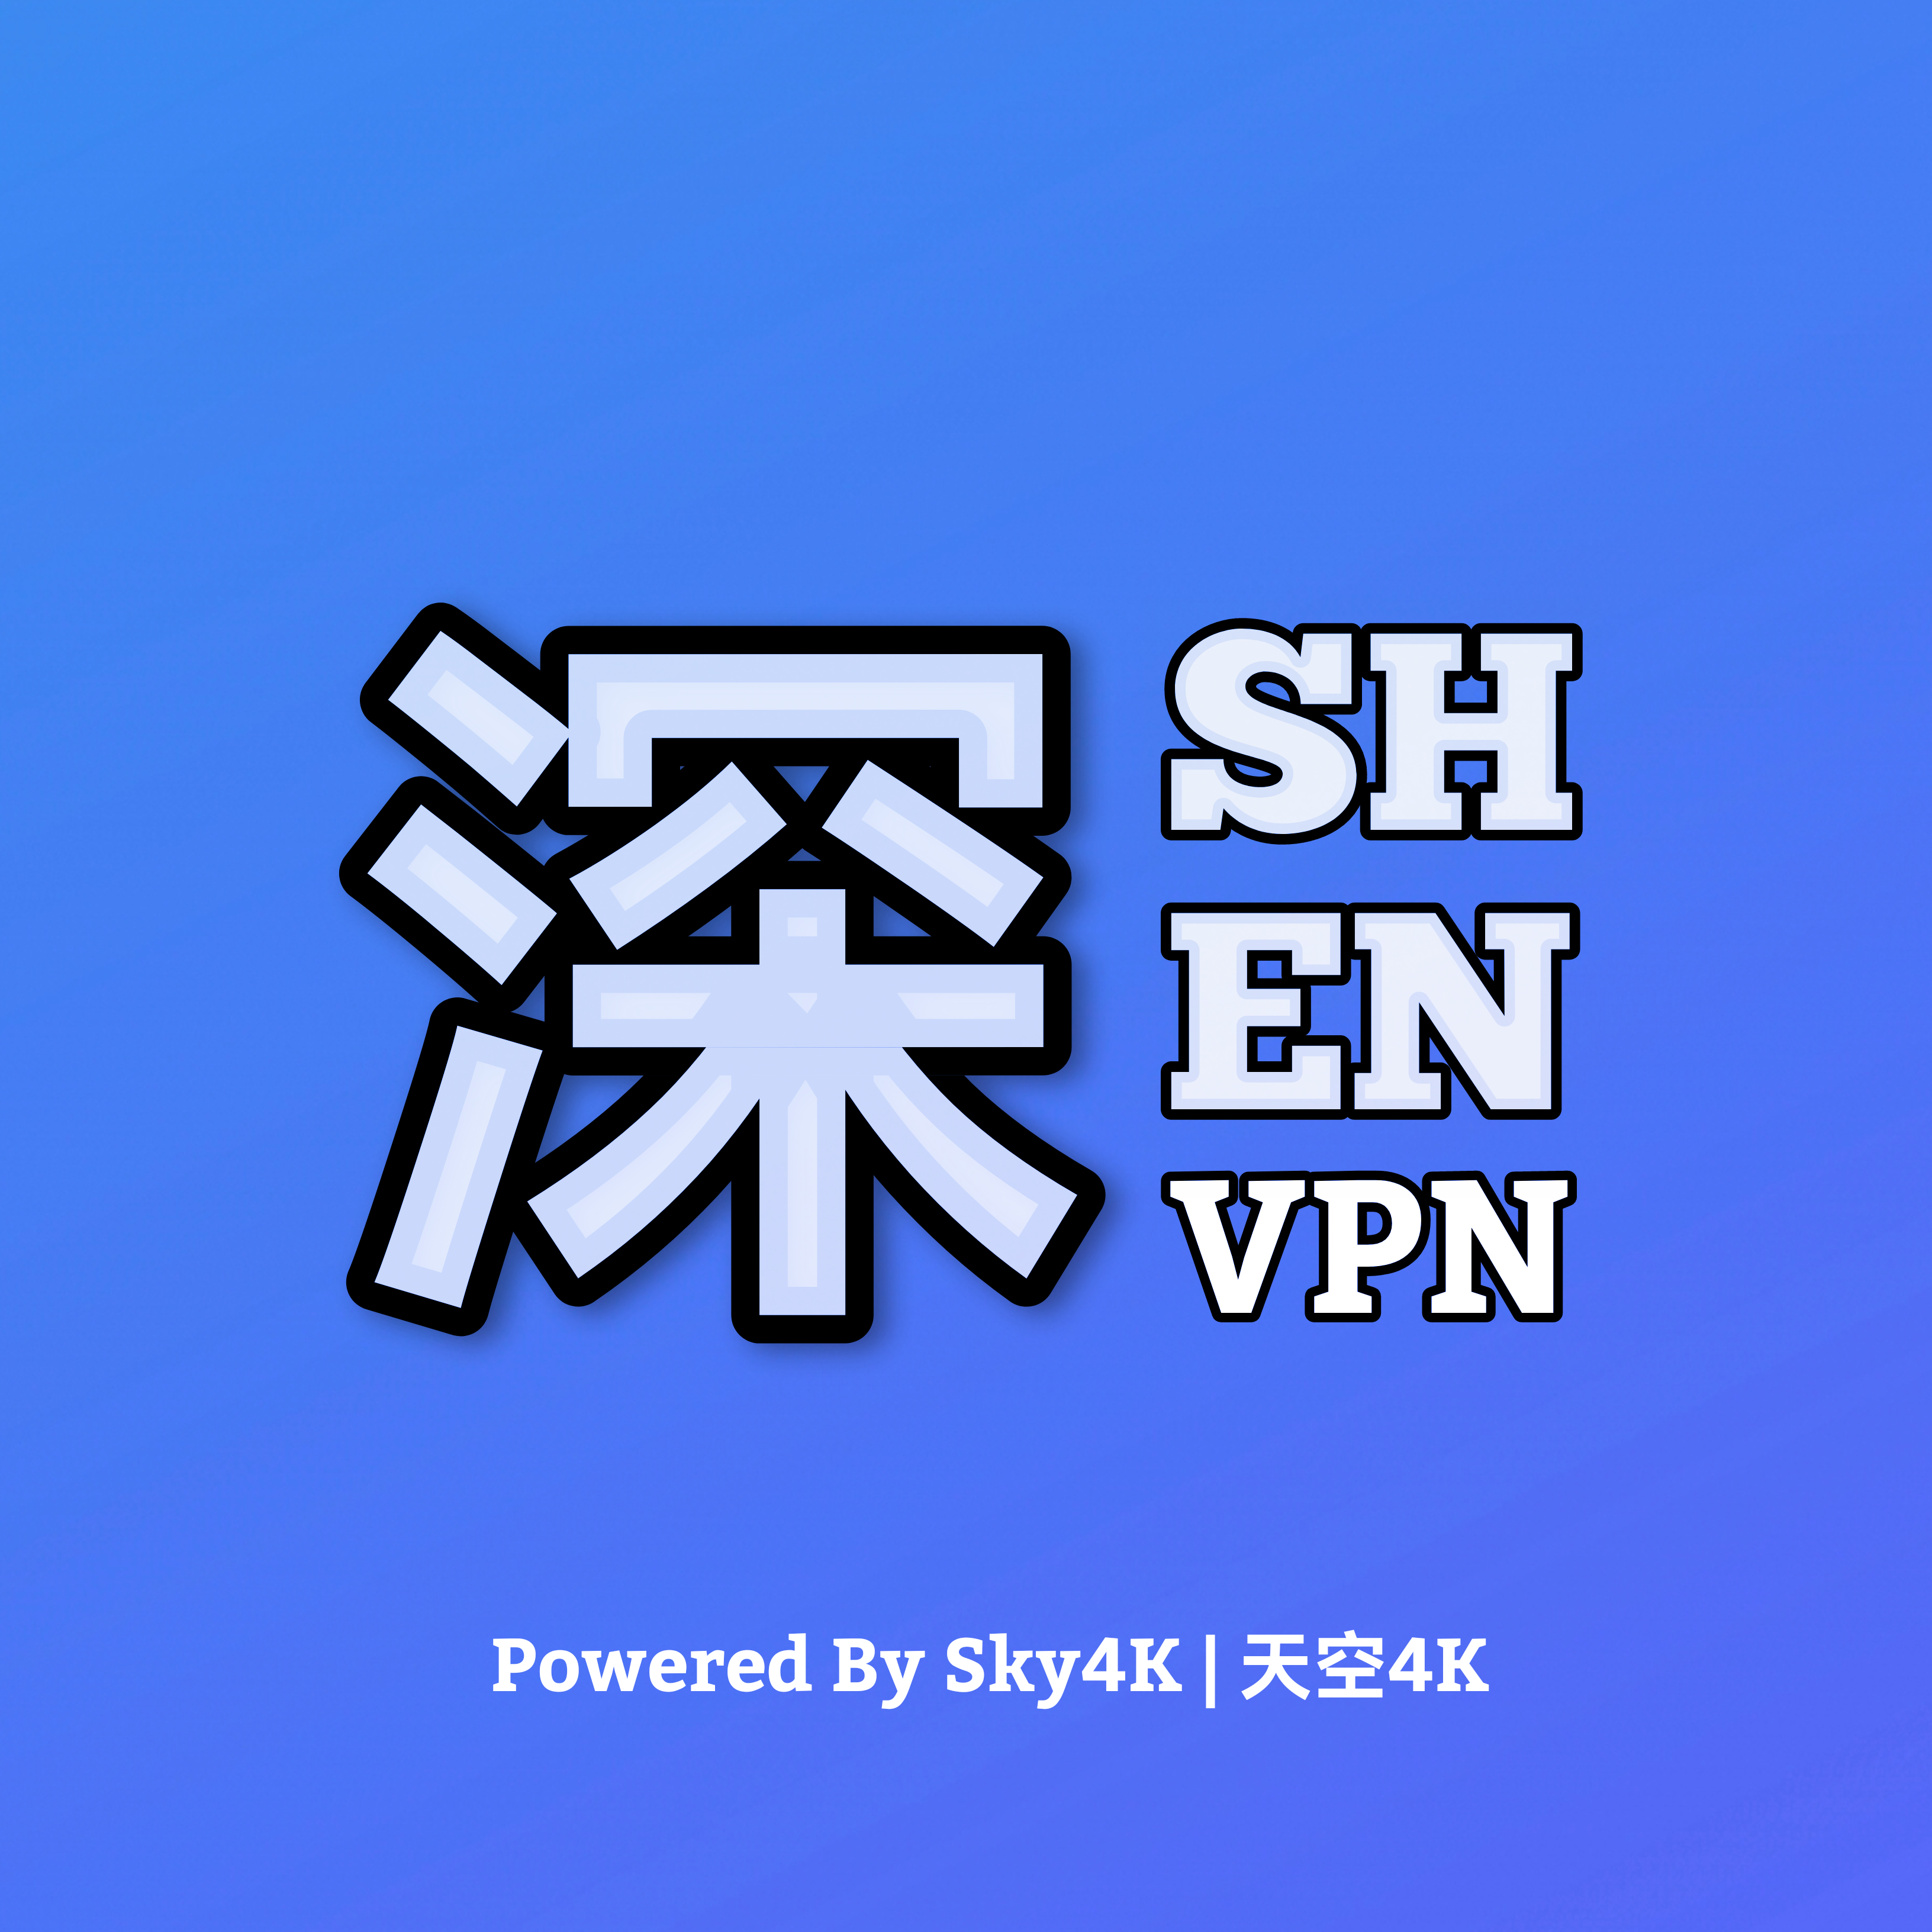 深VPN SHEN VPN